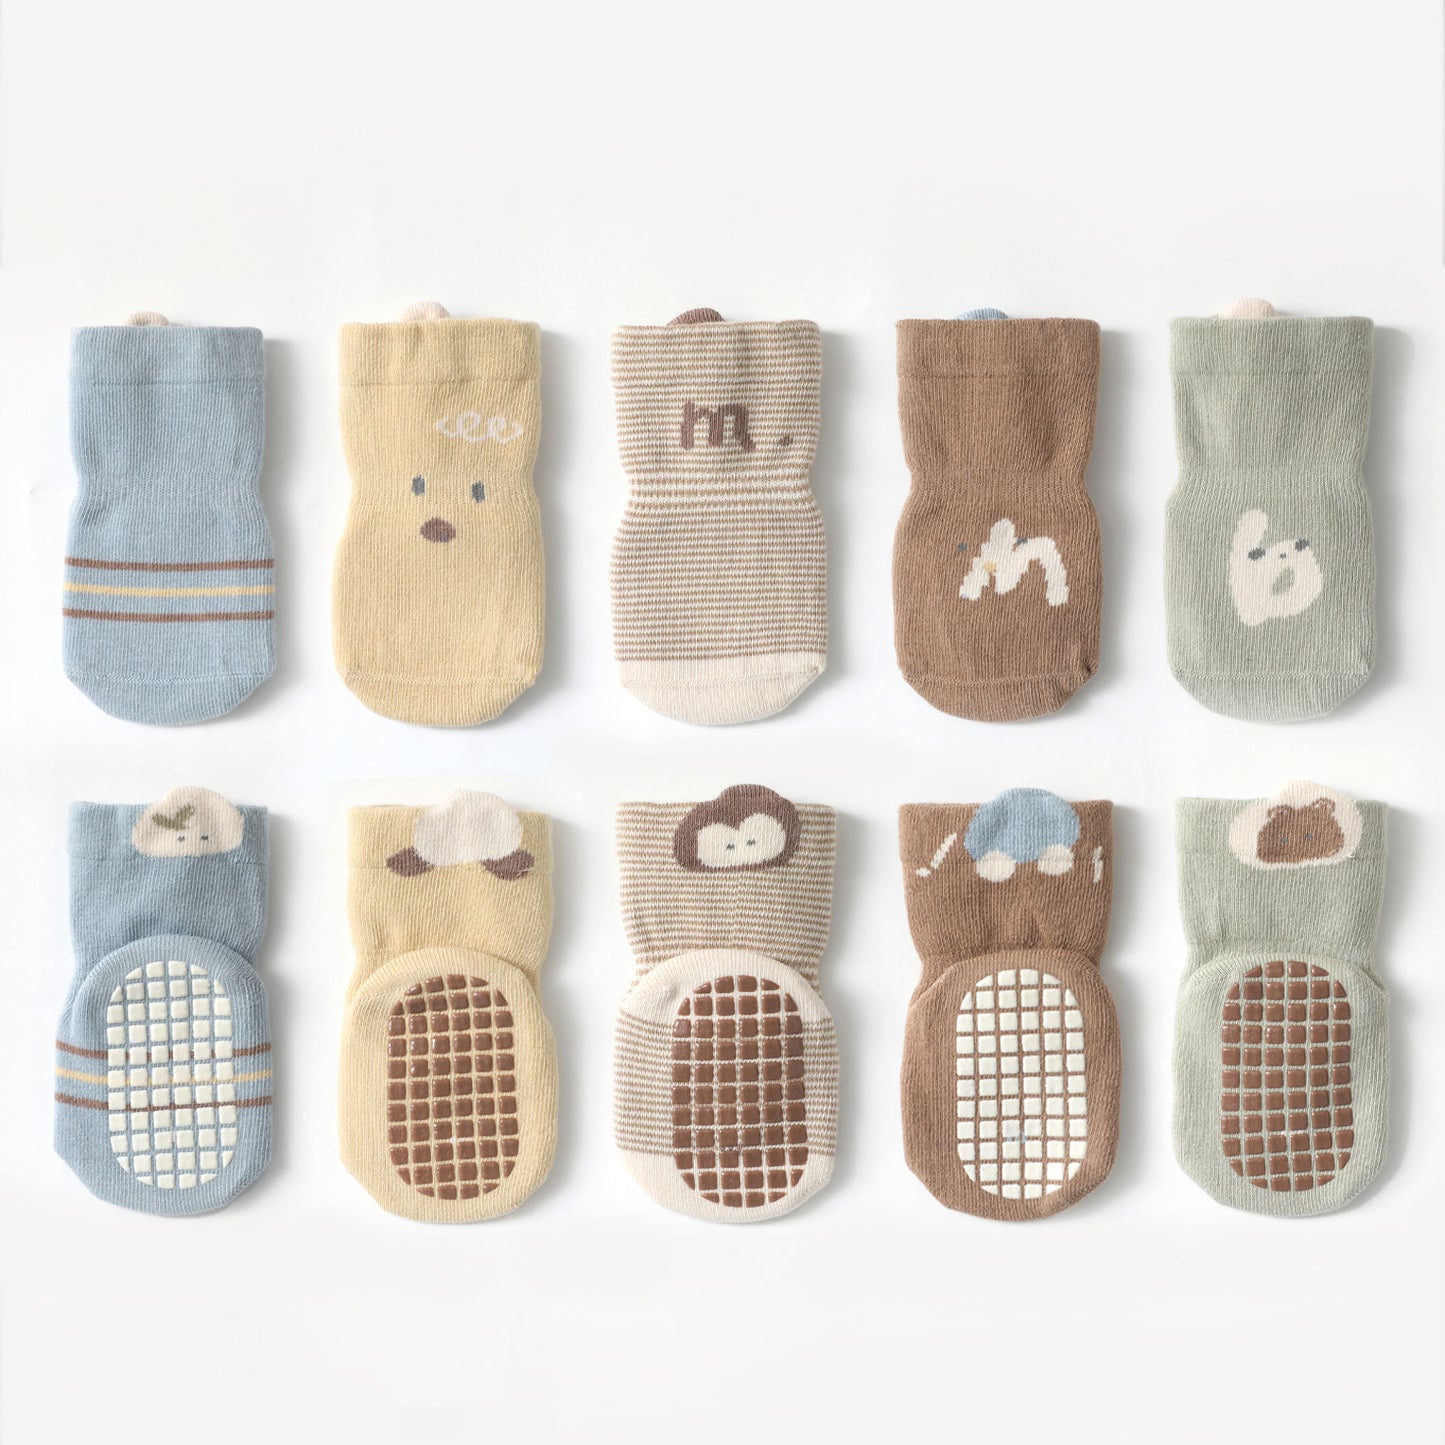 New- Hide & Seek- 5 Pairs of Stay-On Baby & Toddler Non-Slip Socks